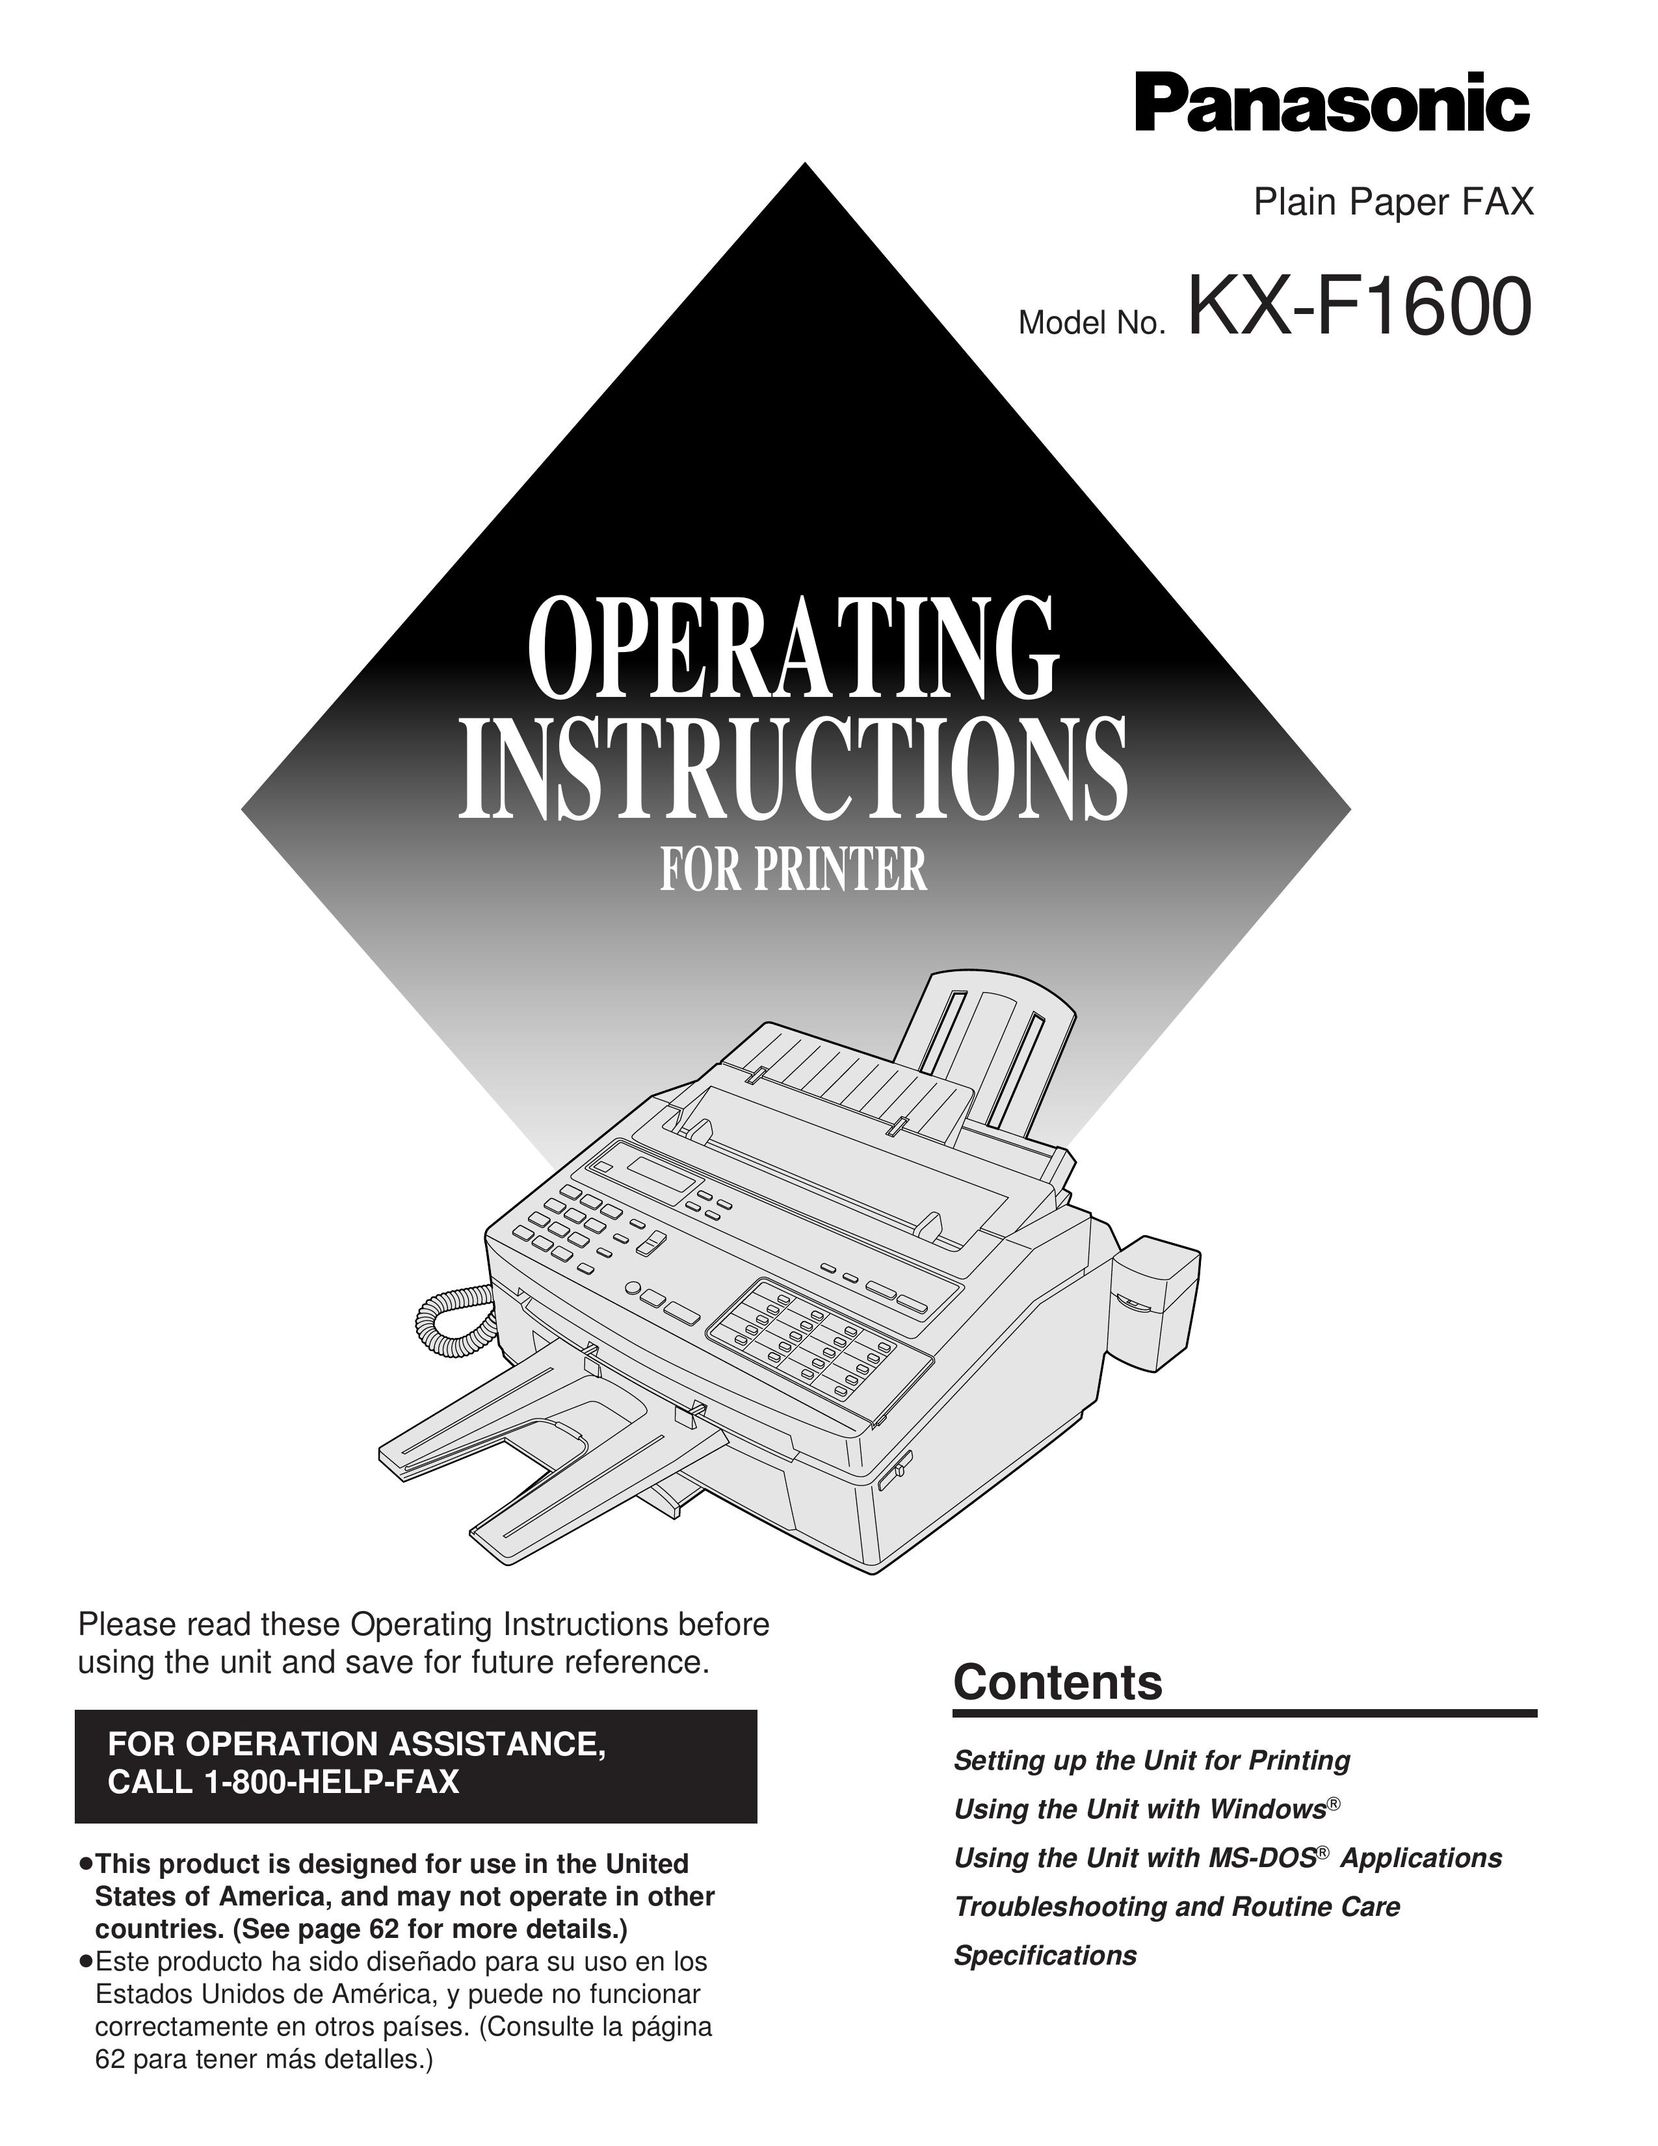 Panasonic KX-F160 Printer User Manual